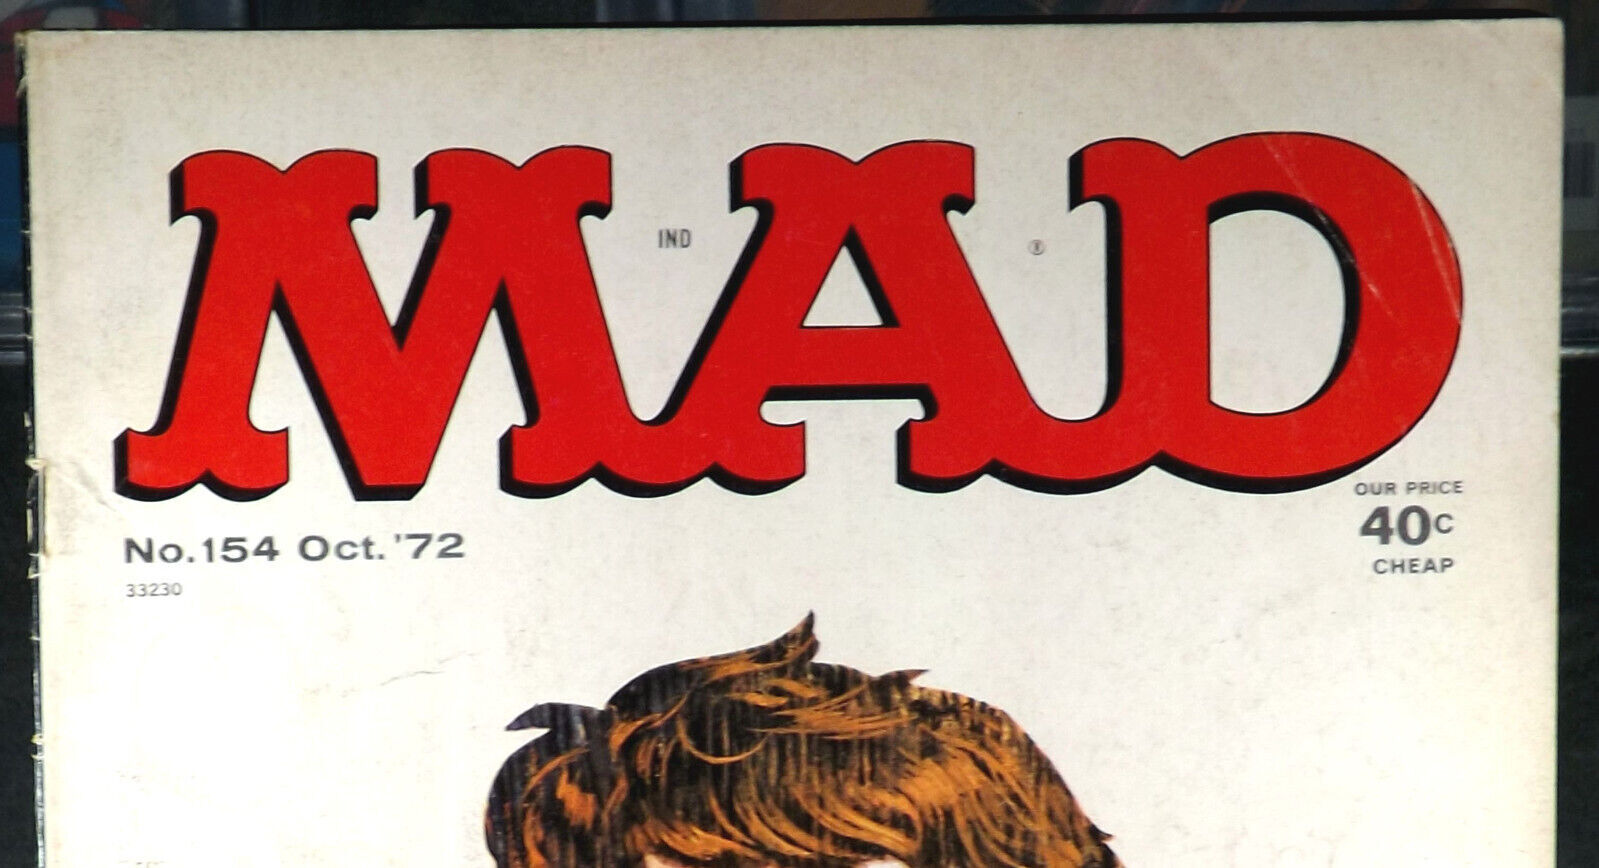 mad magazine covers 1970s